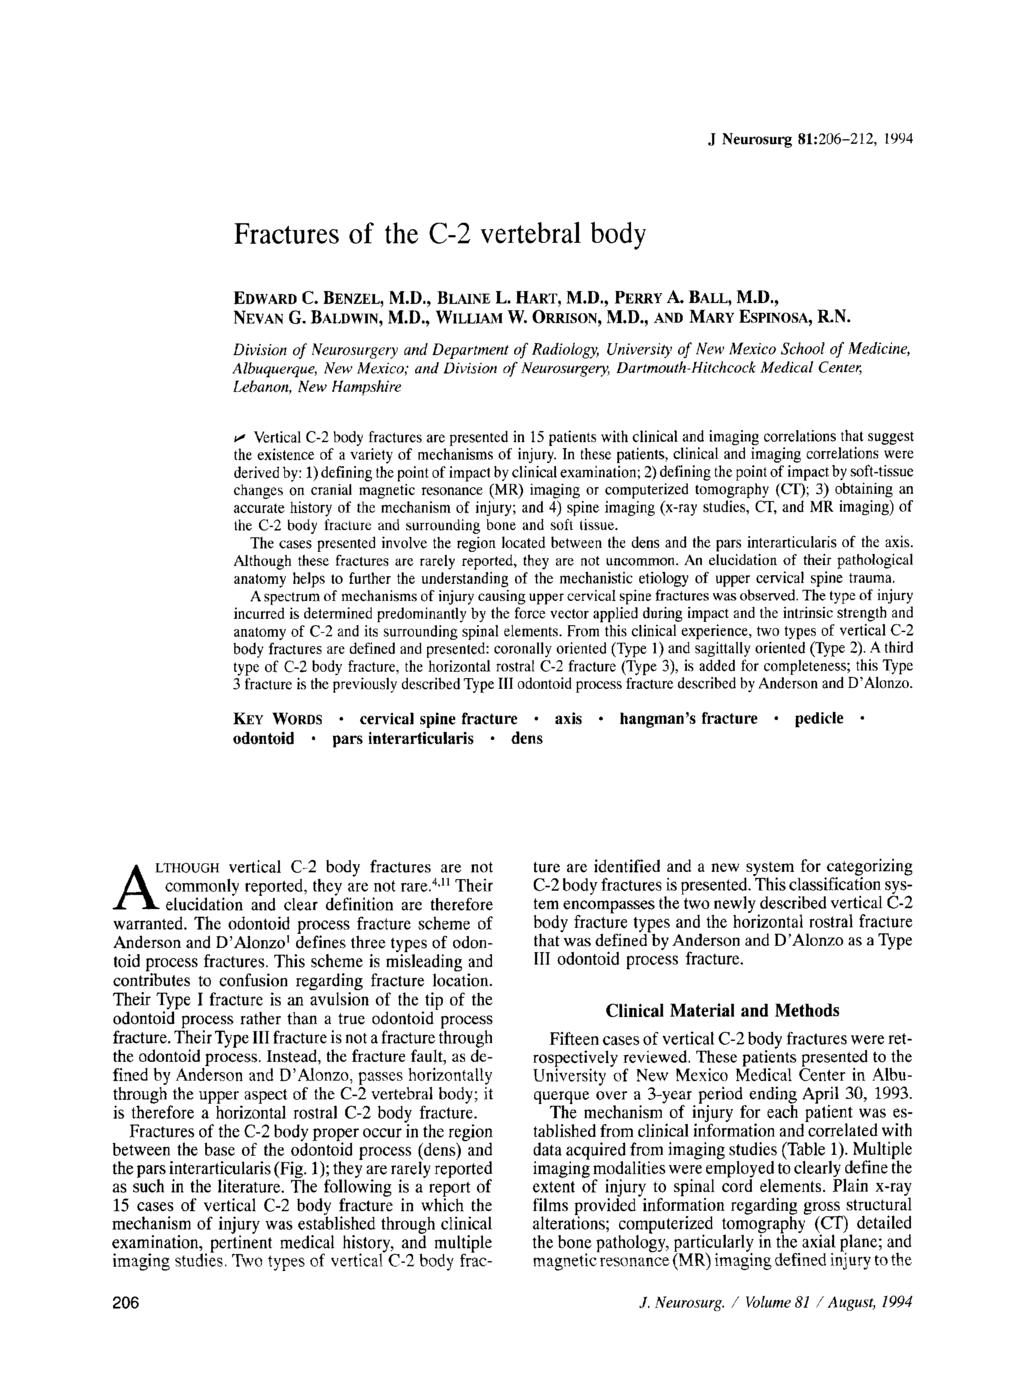 J Neurosurg 81:206-212, 1994 Fractures of the C-2 vertebral body EDWARD C. BENZEL, M.D., BLAINE L. HART, M.D., PERRY A. BALL, M.D., NEVAN G. BALDWIN, M.D., WILLIAM W. ORRISON, M.D., AND MARY ESPINOSA, R.